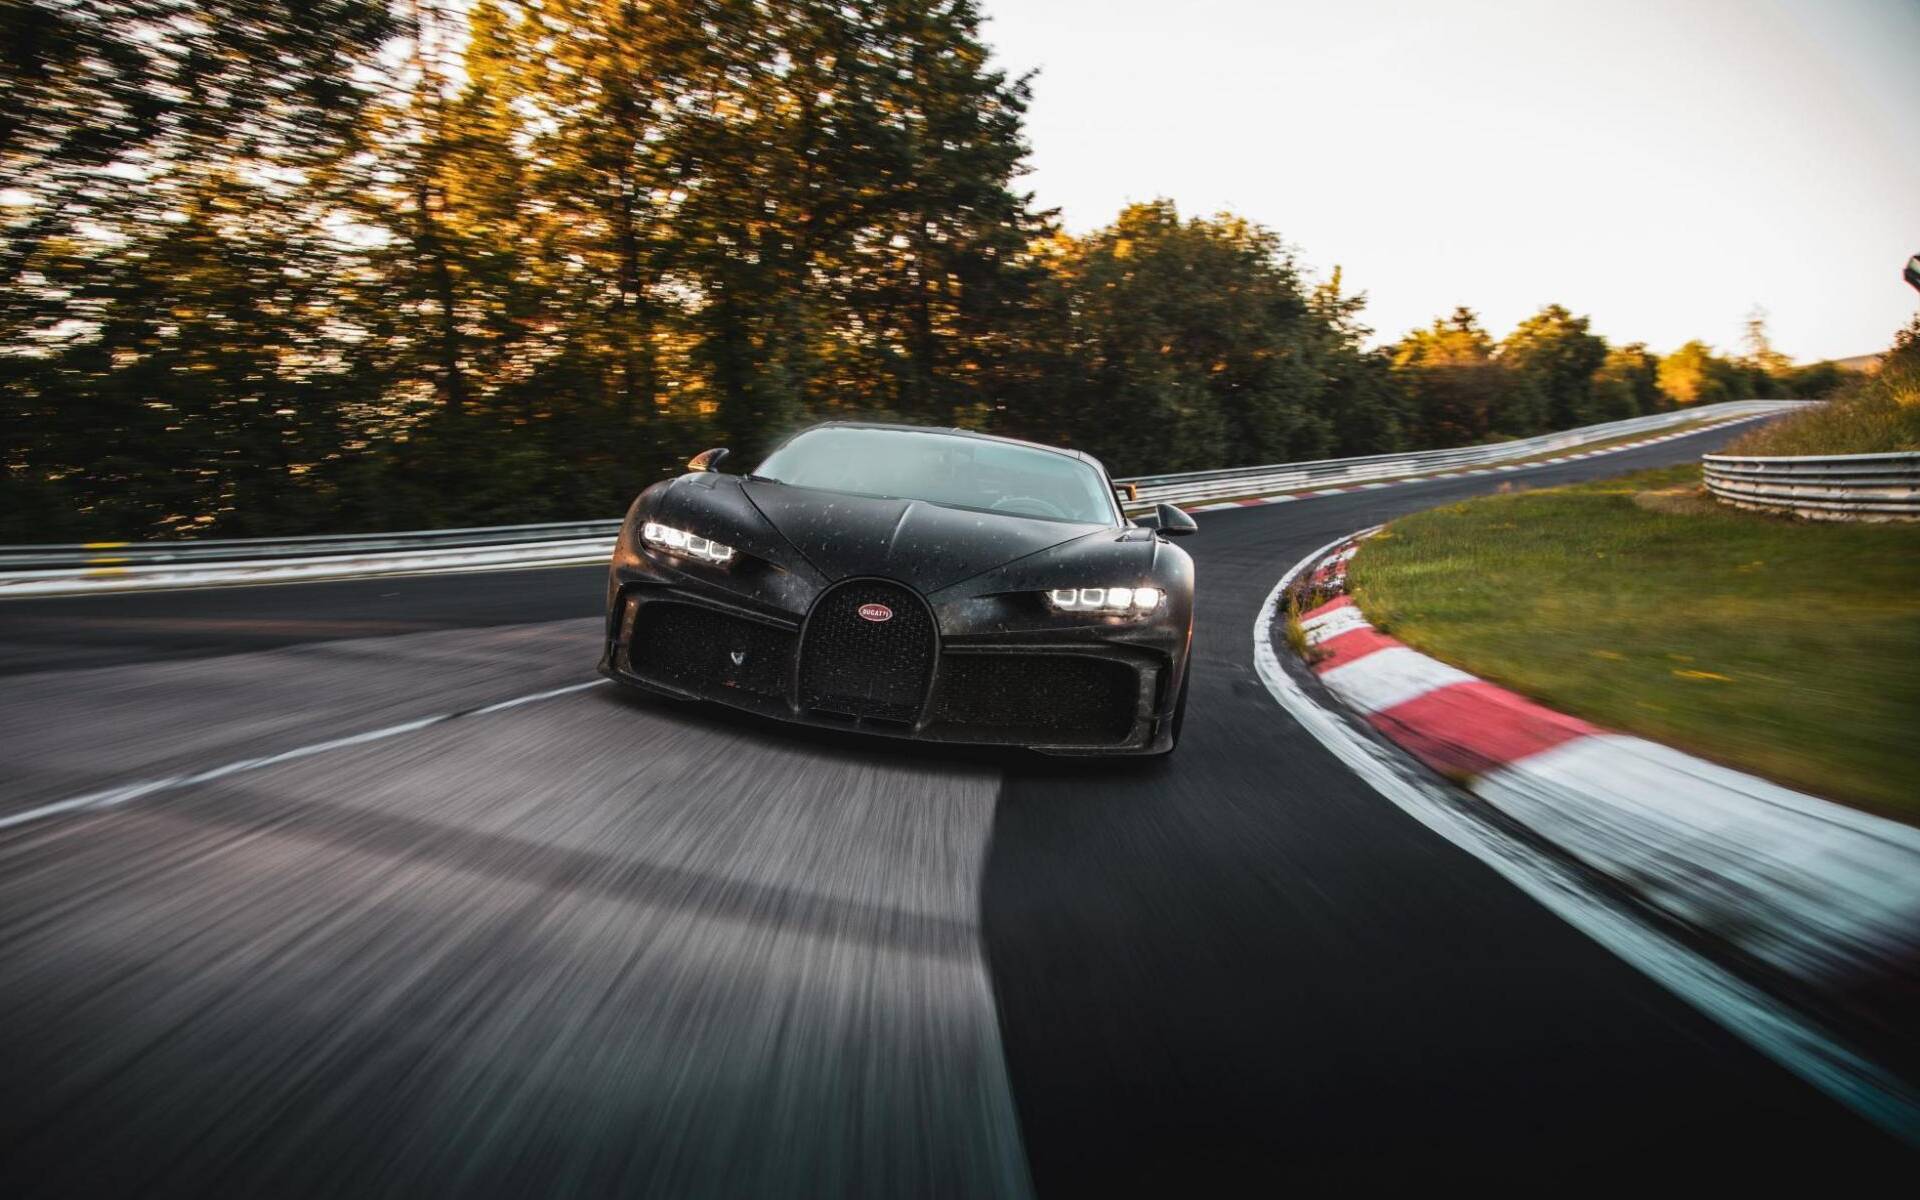 Bugatti Chiron Super Sport undergoing high-speed testing